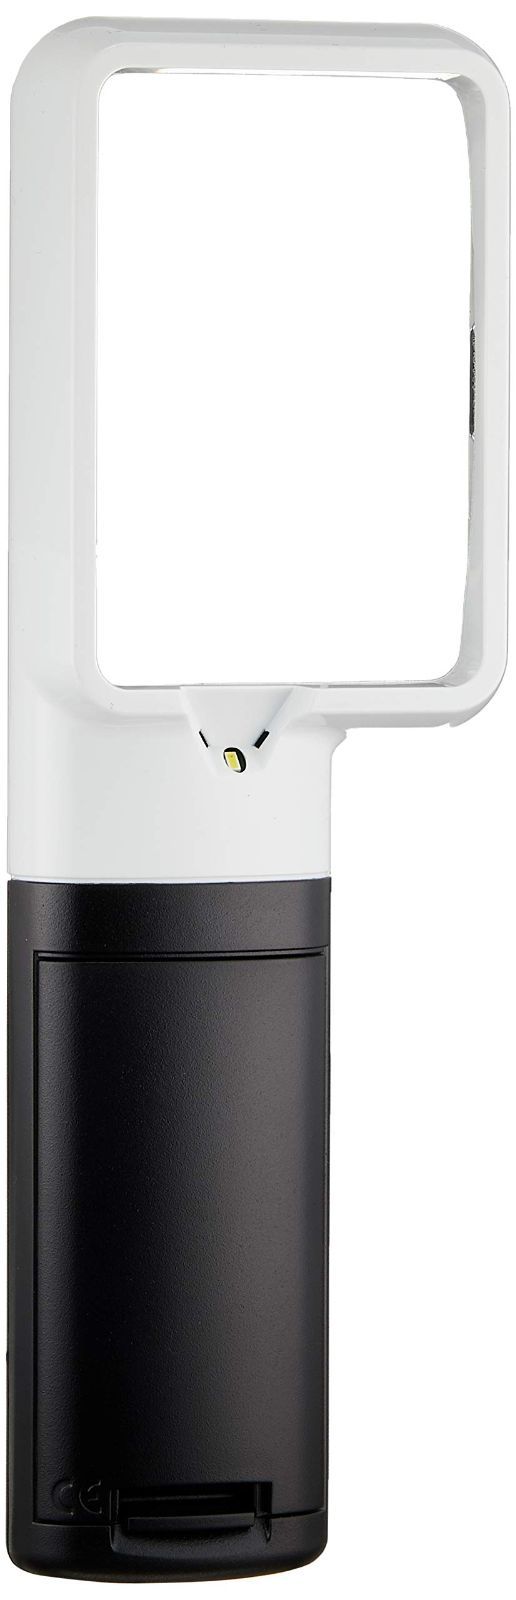 ESCHENBACH ルーペ mobiluxLED mobase LEDワイドライトルーペ専用スタンド 50×75mm(3.5倍) 151 通販 